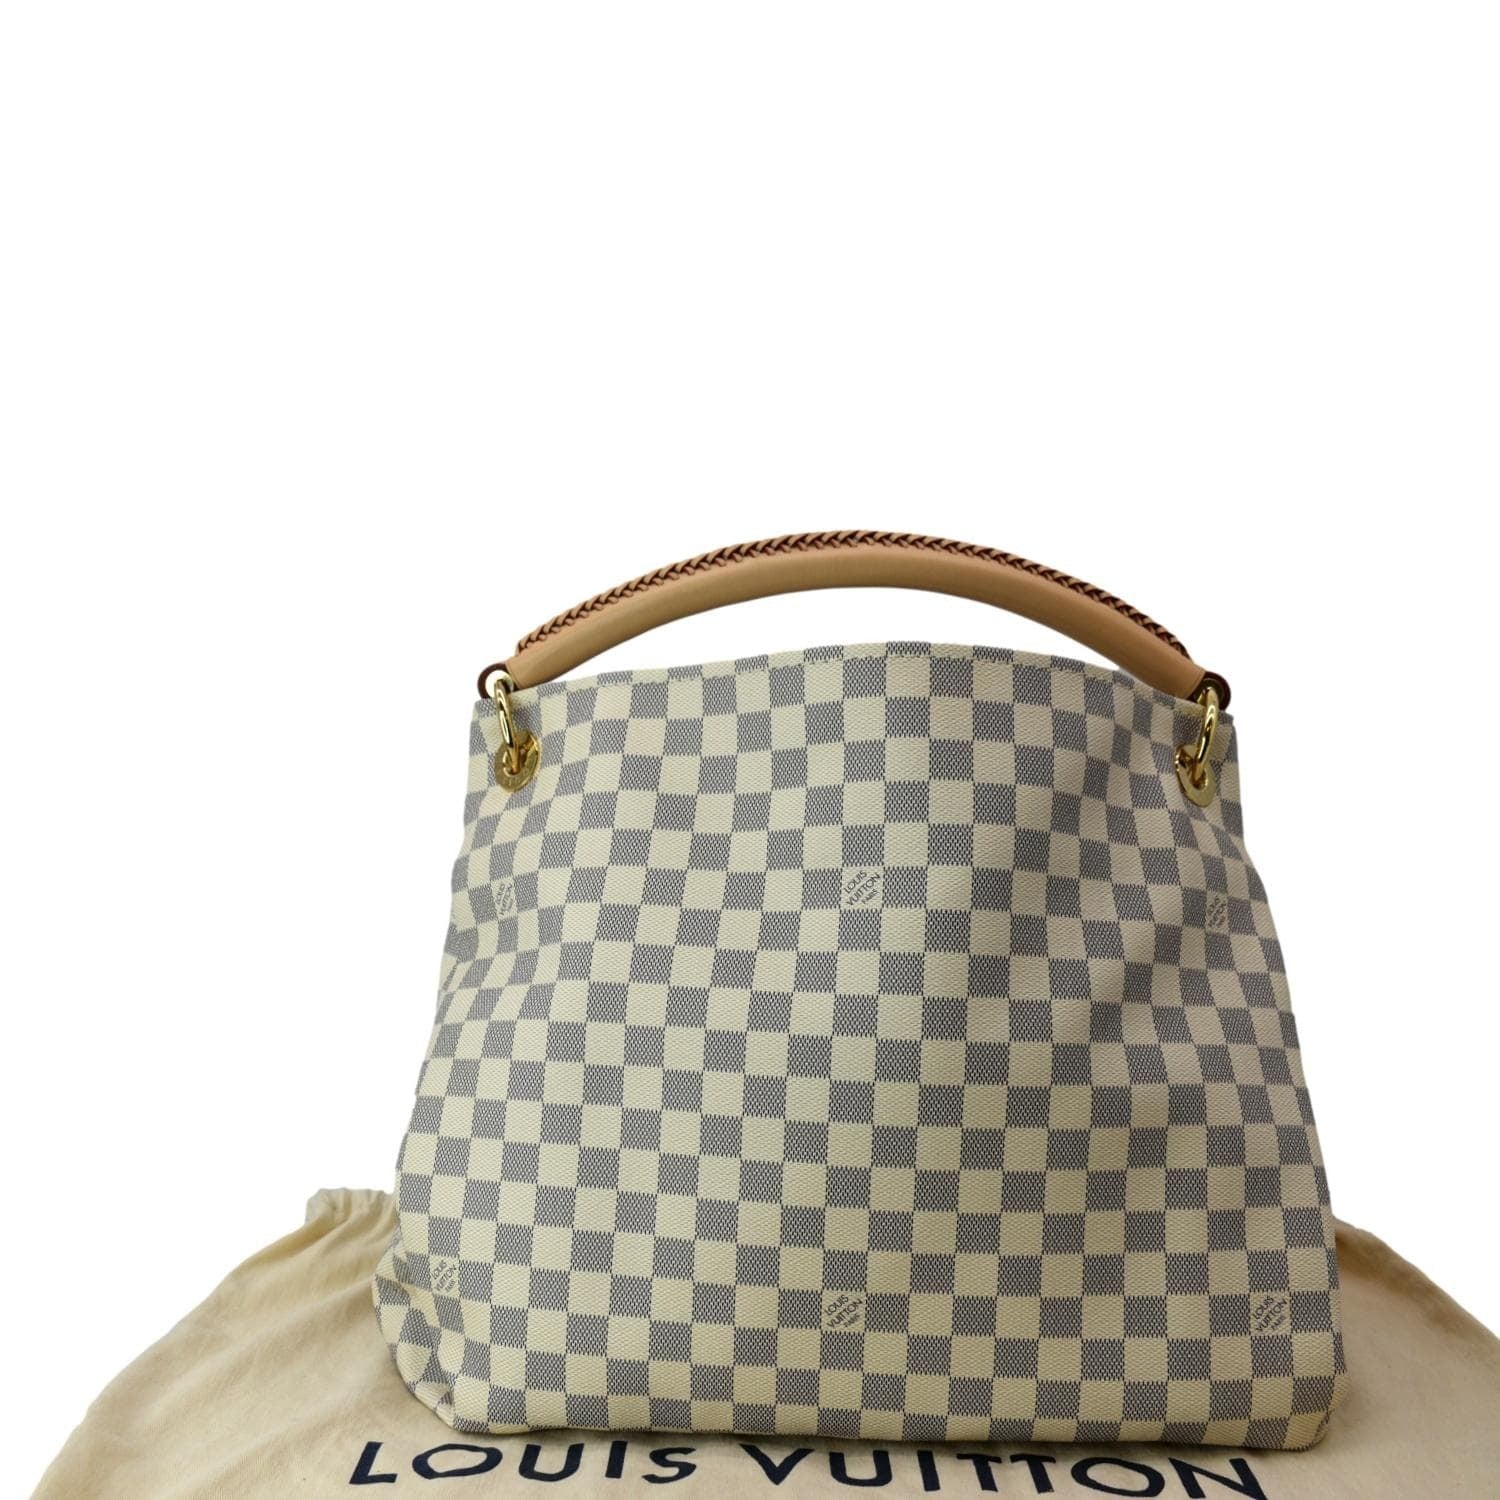 Louis Vuitton Artsy MM Damier Azur Hobo Bag in White